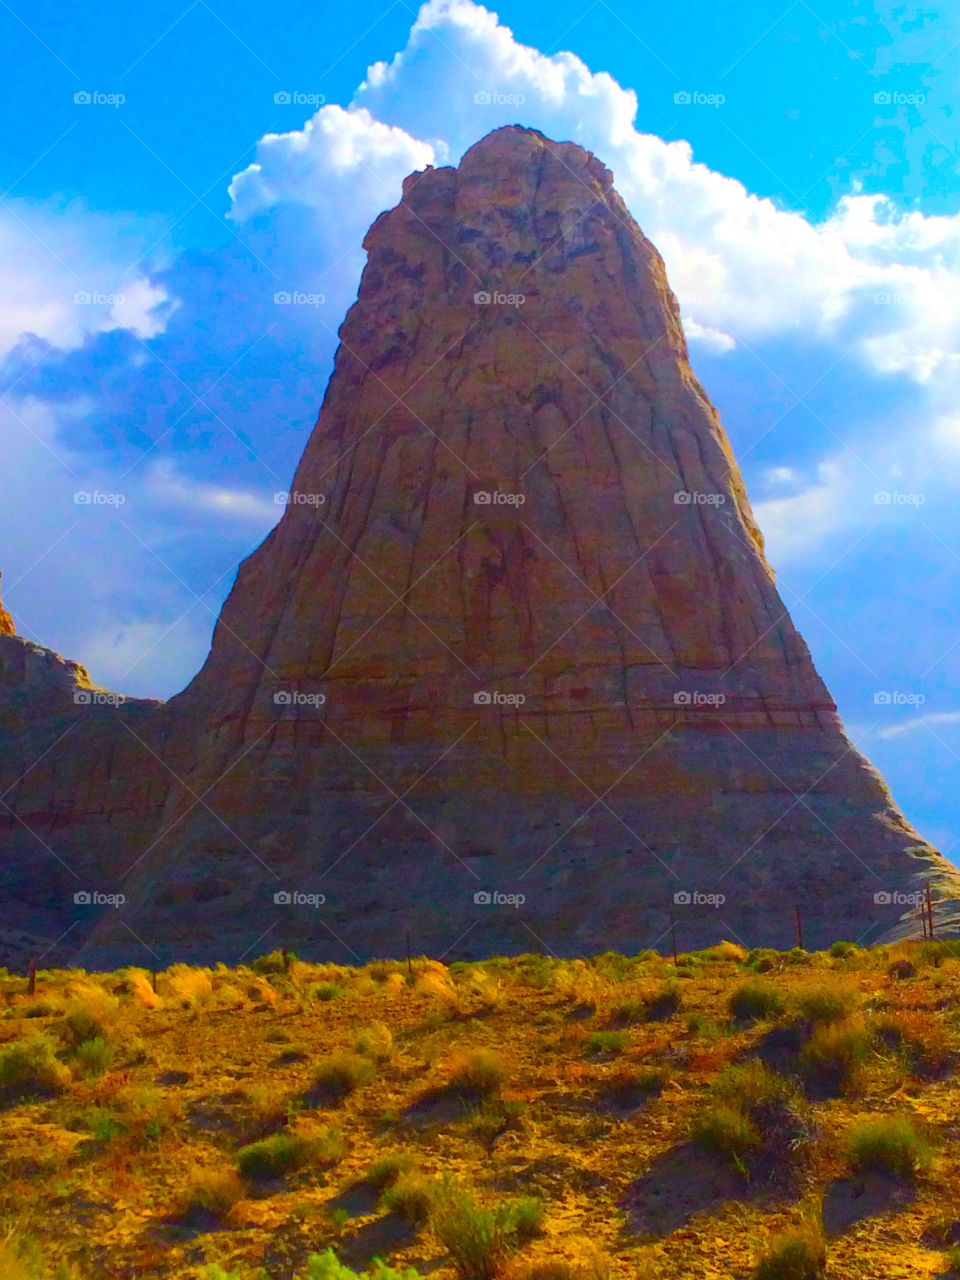 Random Arizona Mound . Take while driving through Arizona 